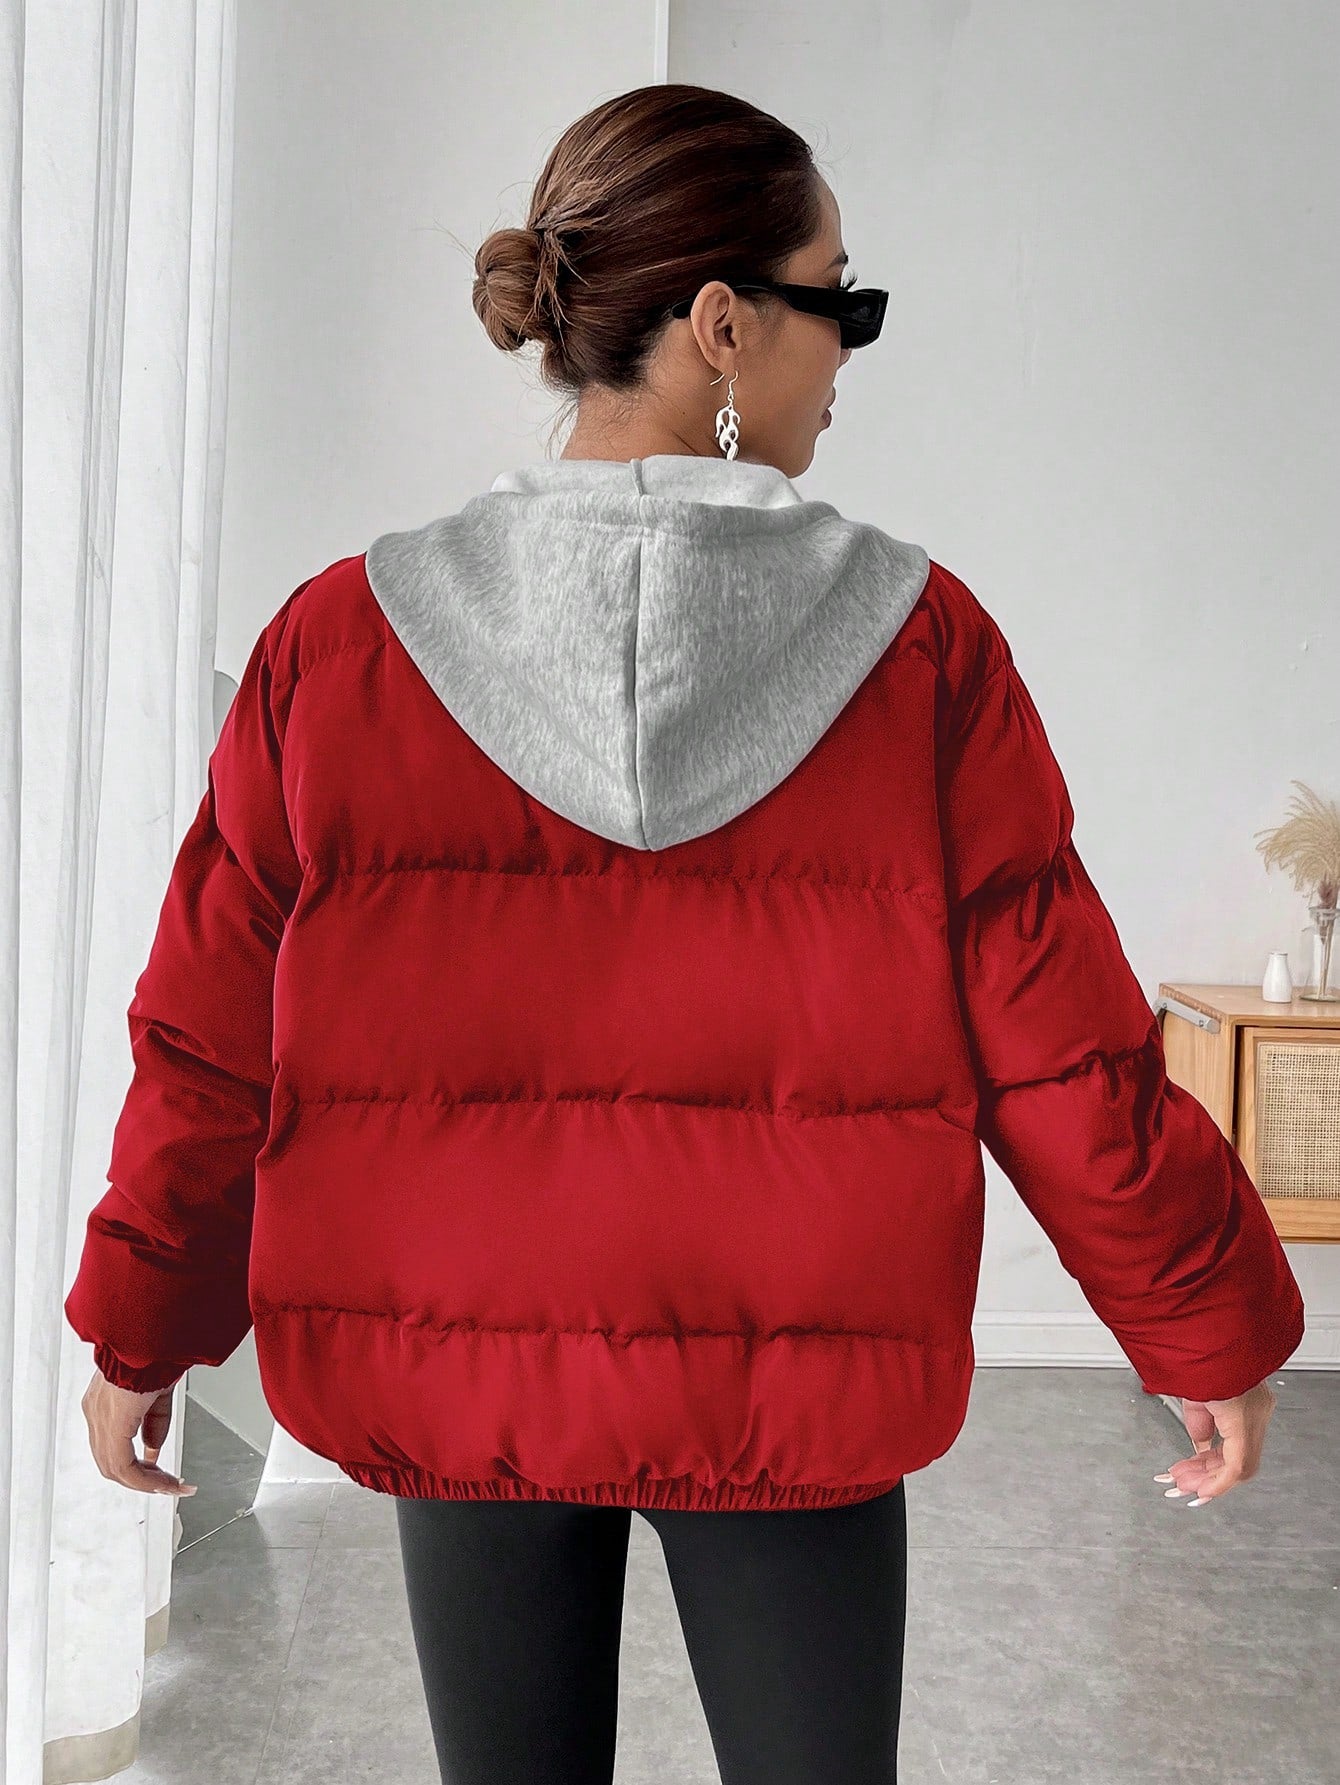 EZwear Women's Letter Print Color-block Hooded Padded Jacket